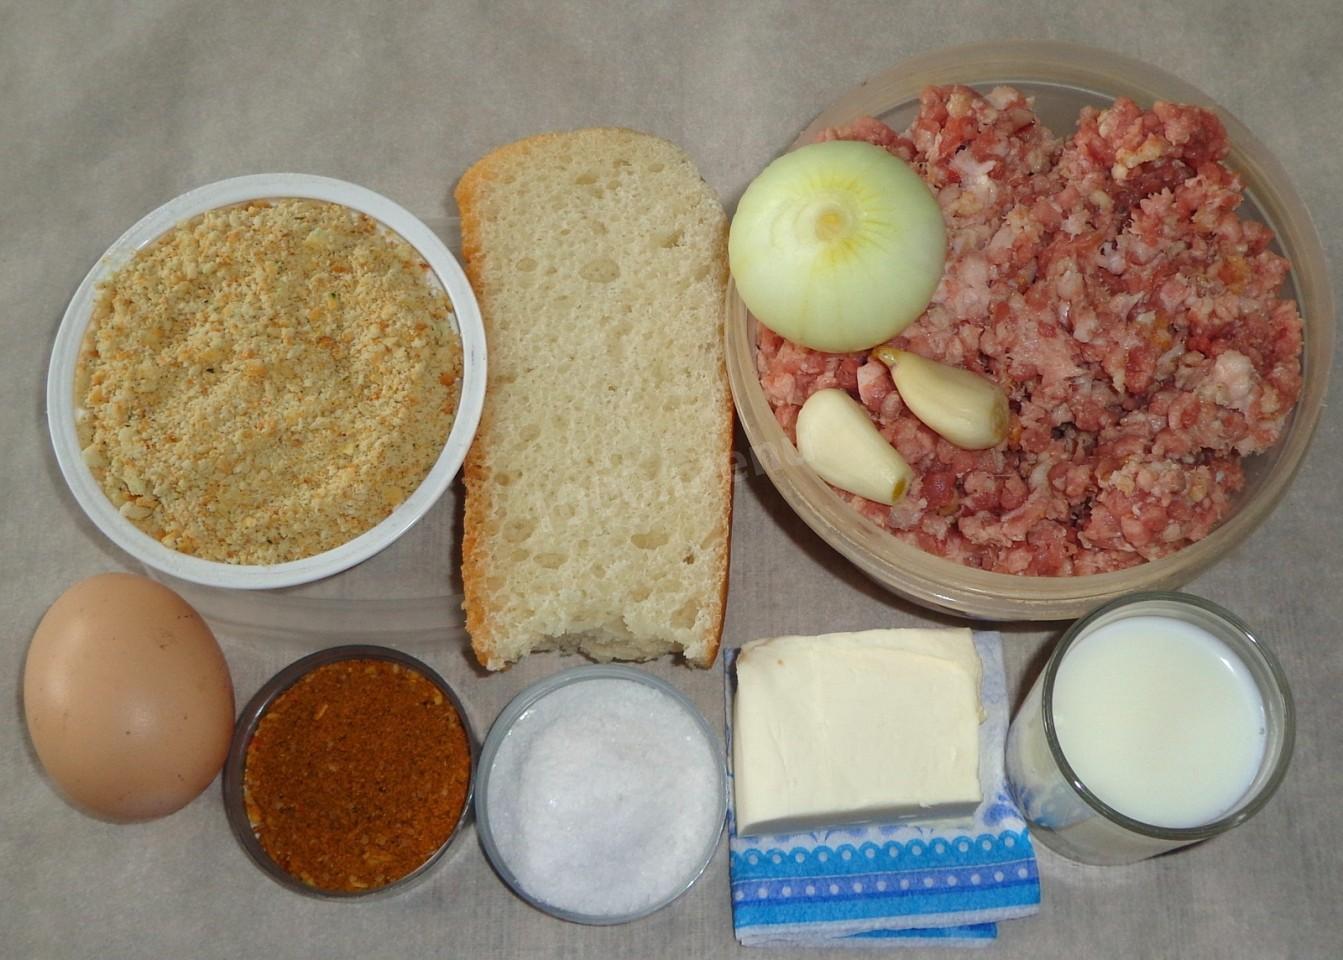 лук, хлеб и яйца - лишние ингредиенты в котлетах